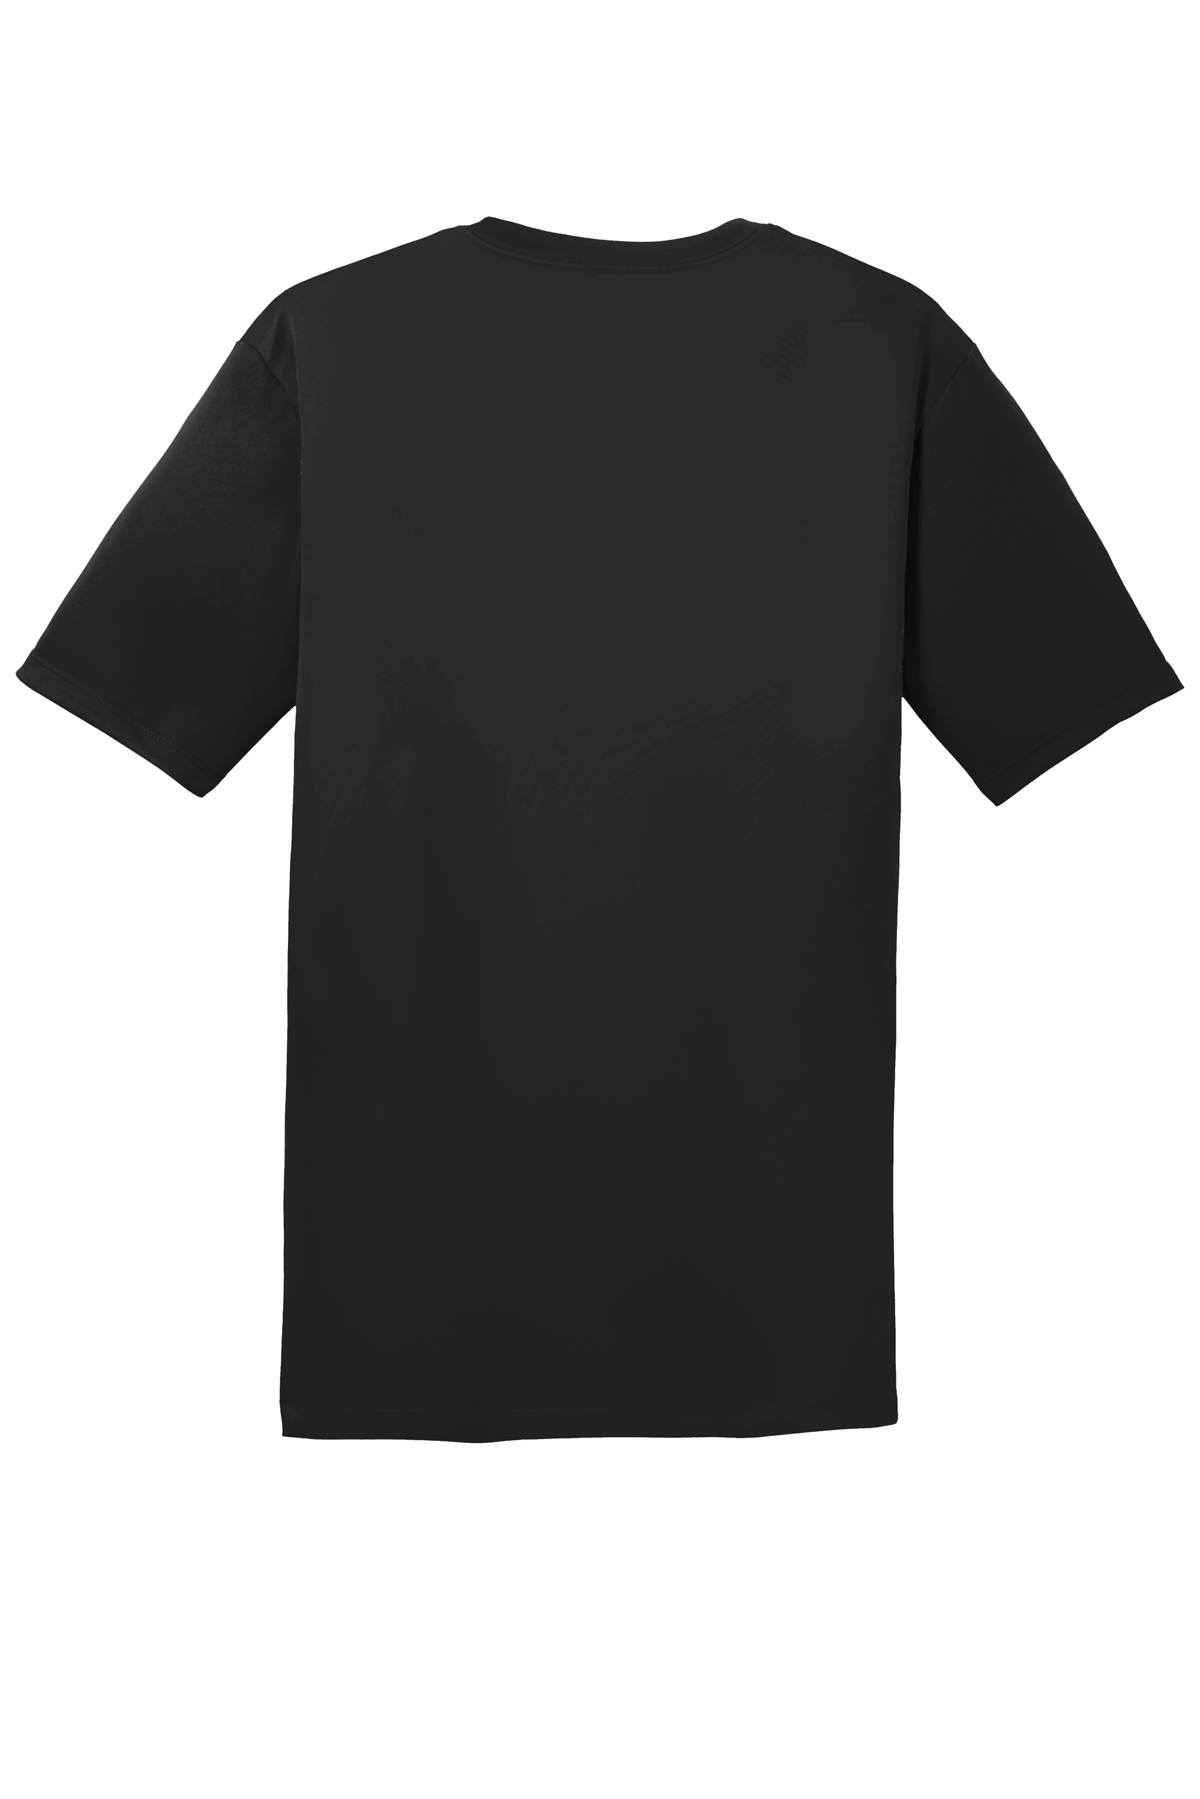 Hanes Cool Dri Performance T-Shirt | Product | SanMar